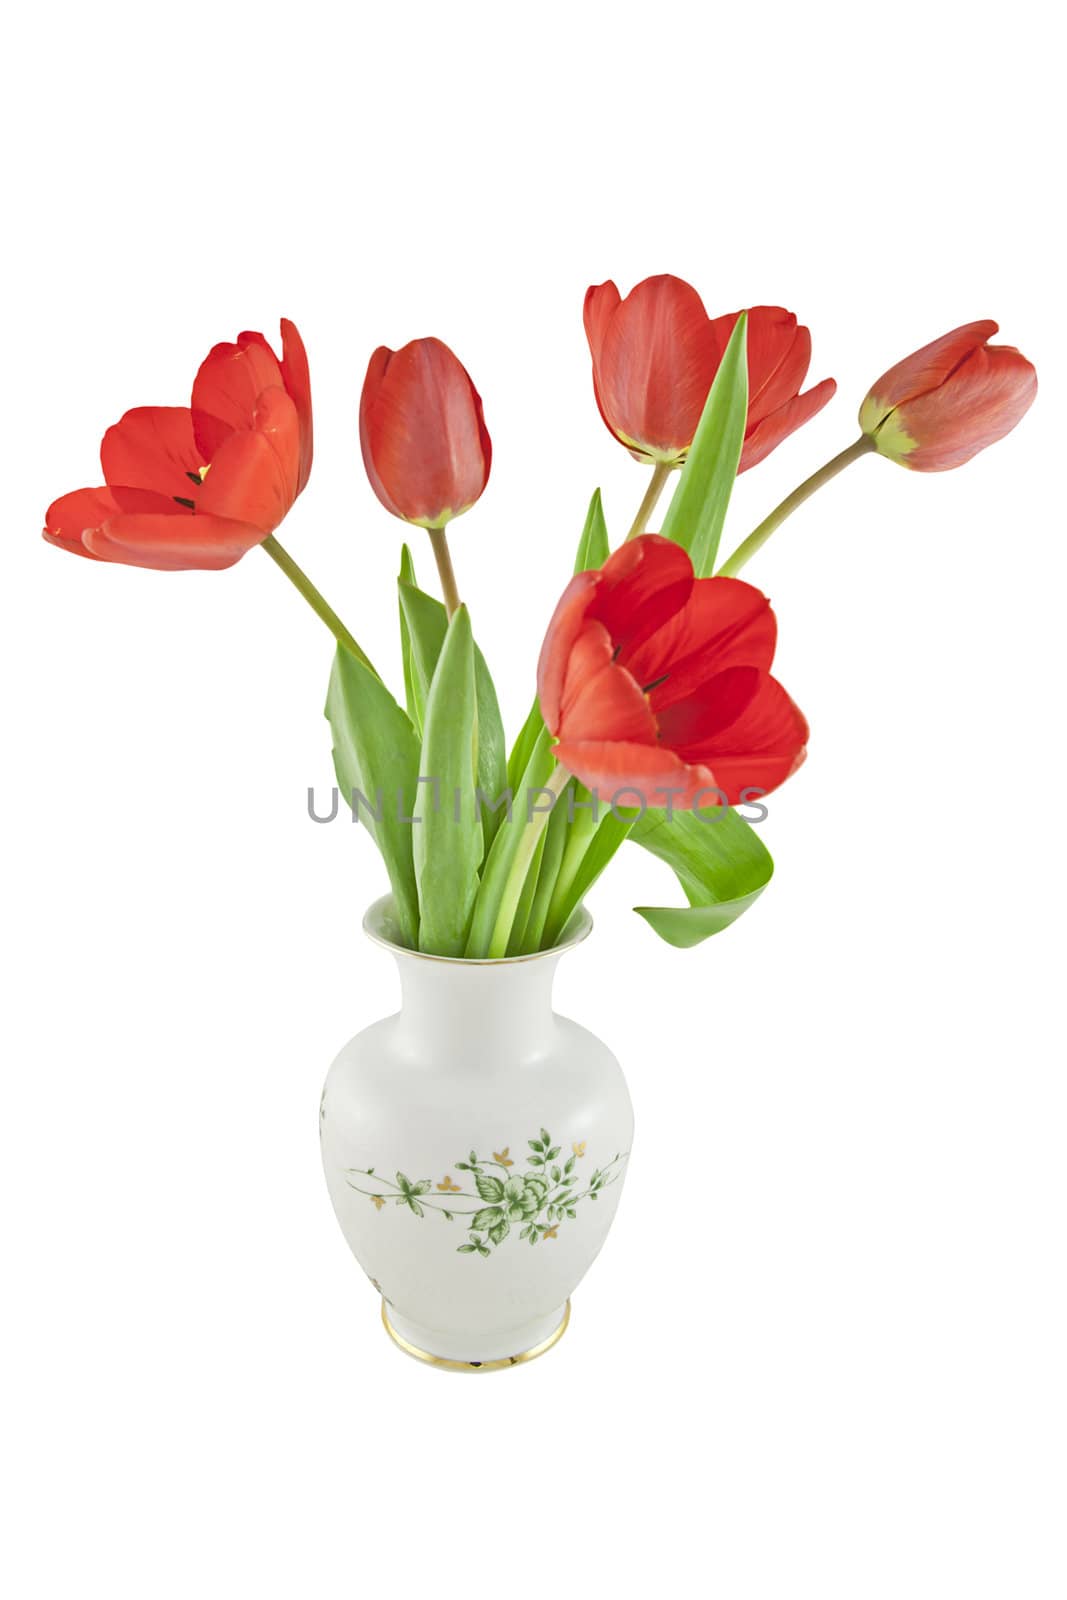 Red tulips in a vase by renegadewanderer